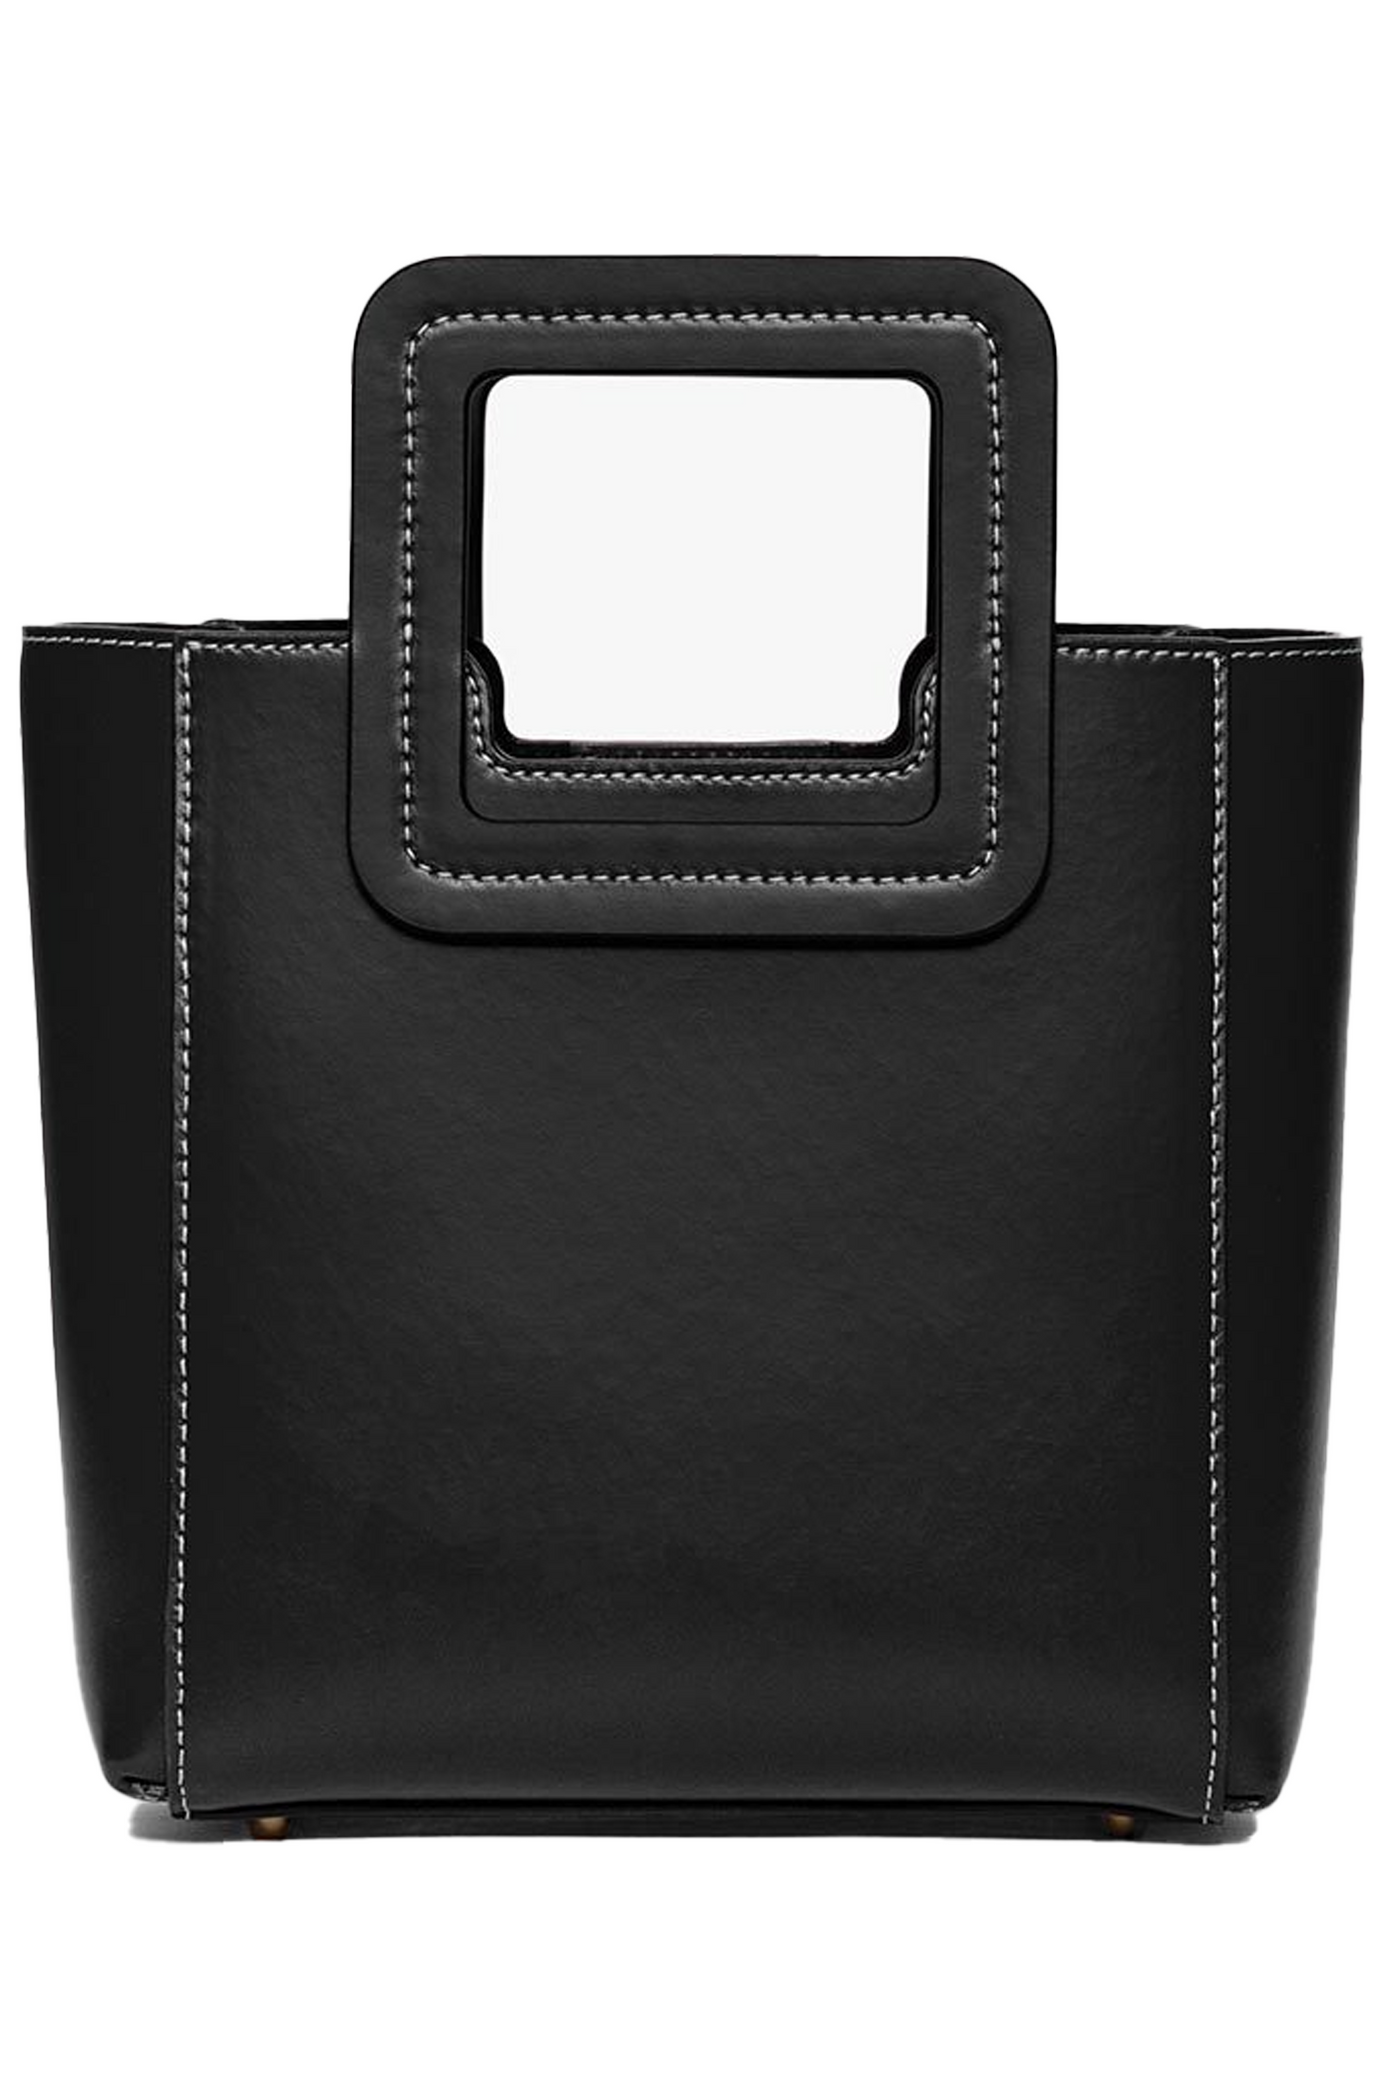 STAUD Mini Shirley Leather Bag Review 